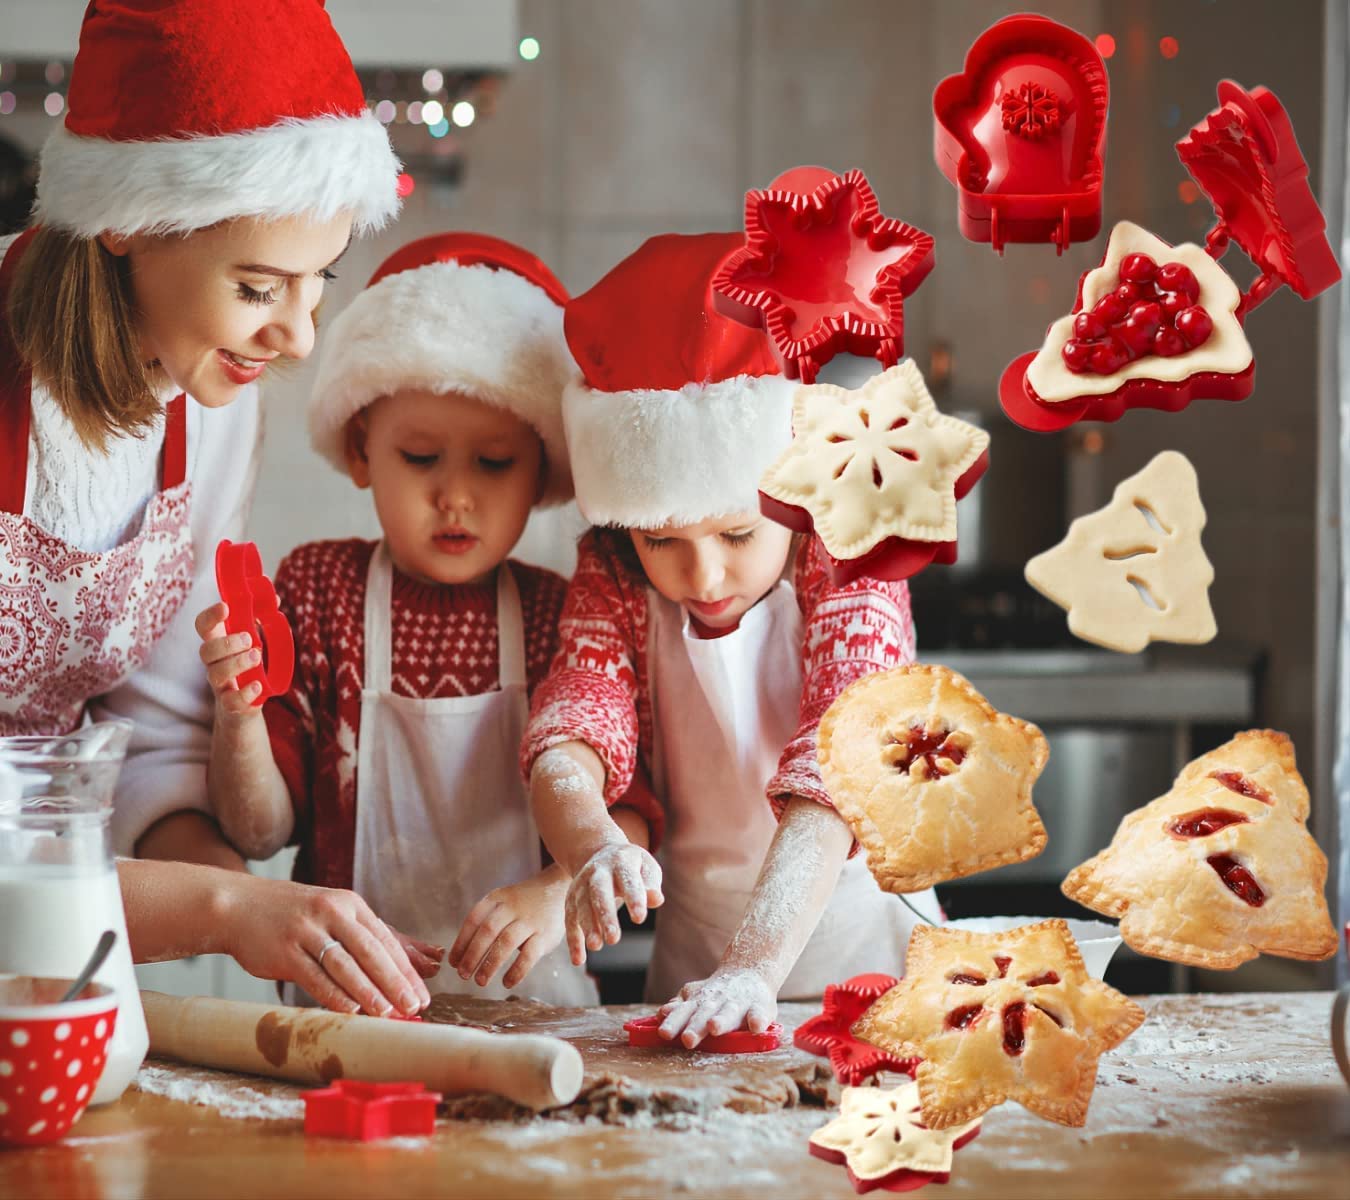 🎄LAST DAY SALE🎄 Christmas One-press Hand Pie Maker